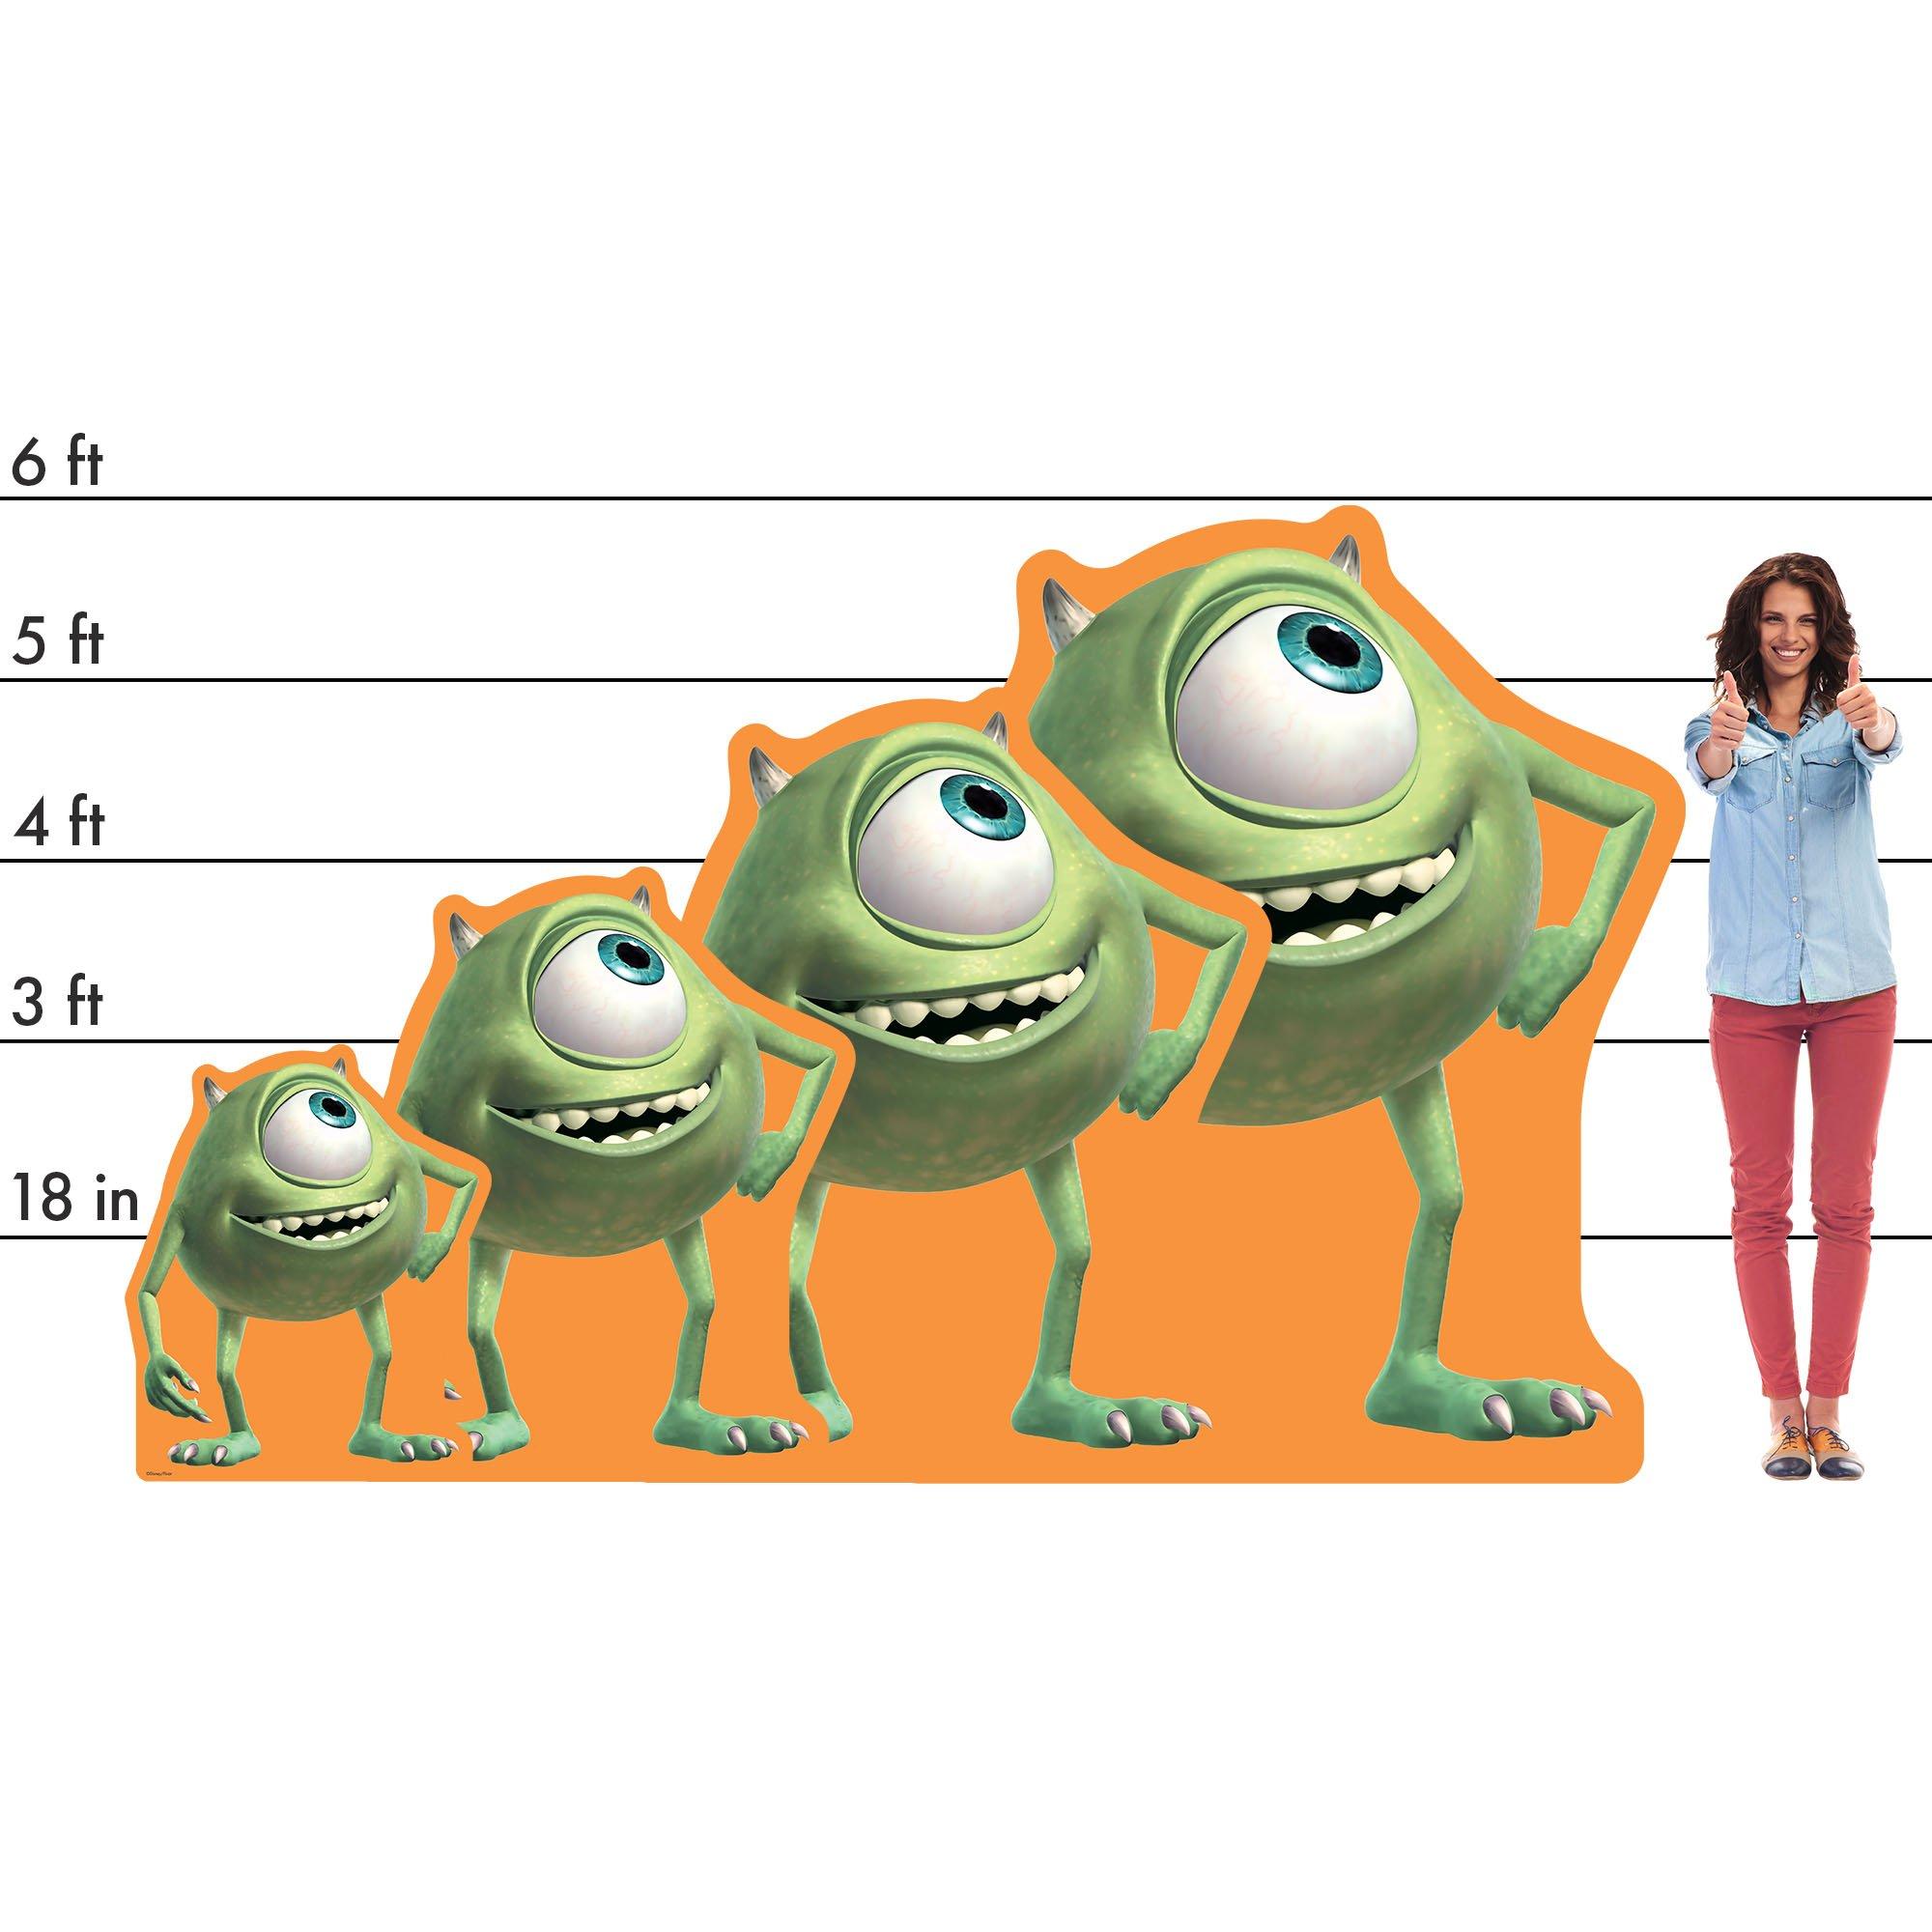 Mike Wazowski Cardboard Cutout, 3ft - Pixar Monsters, Inc.